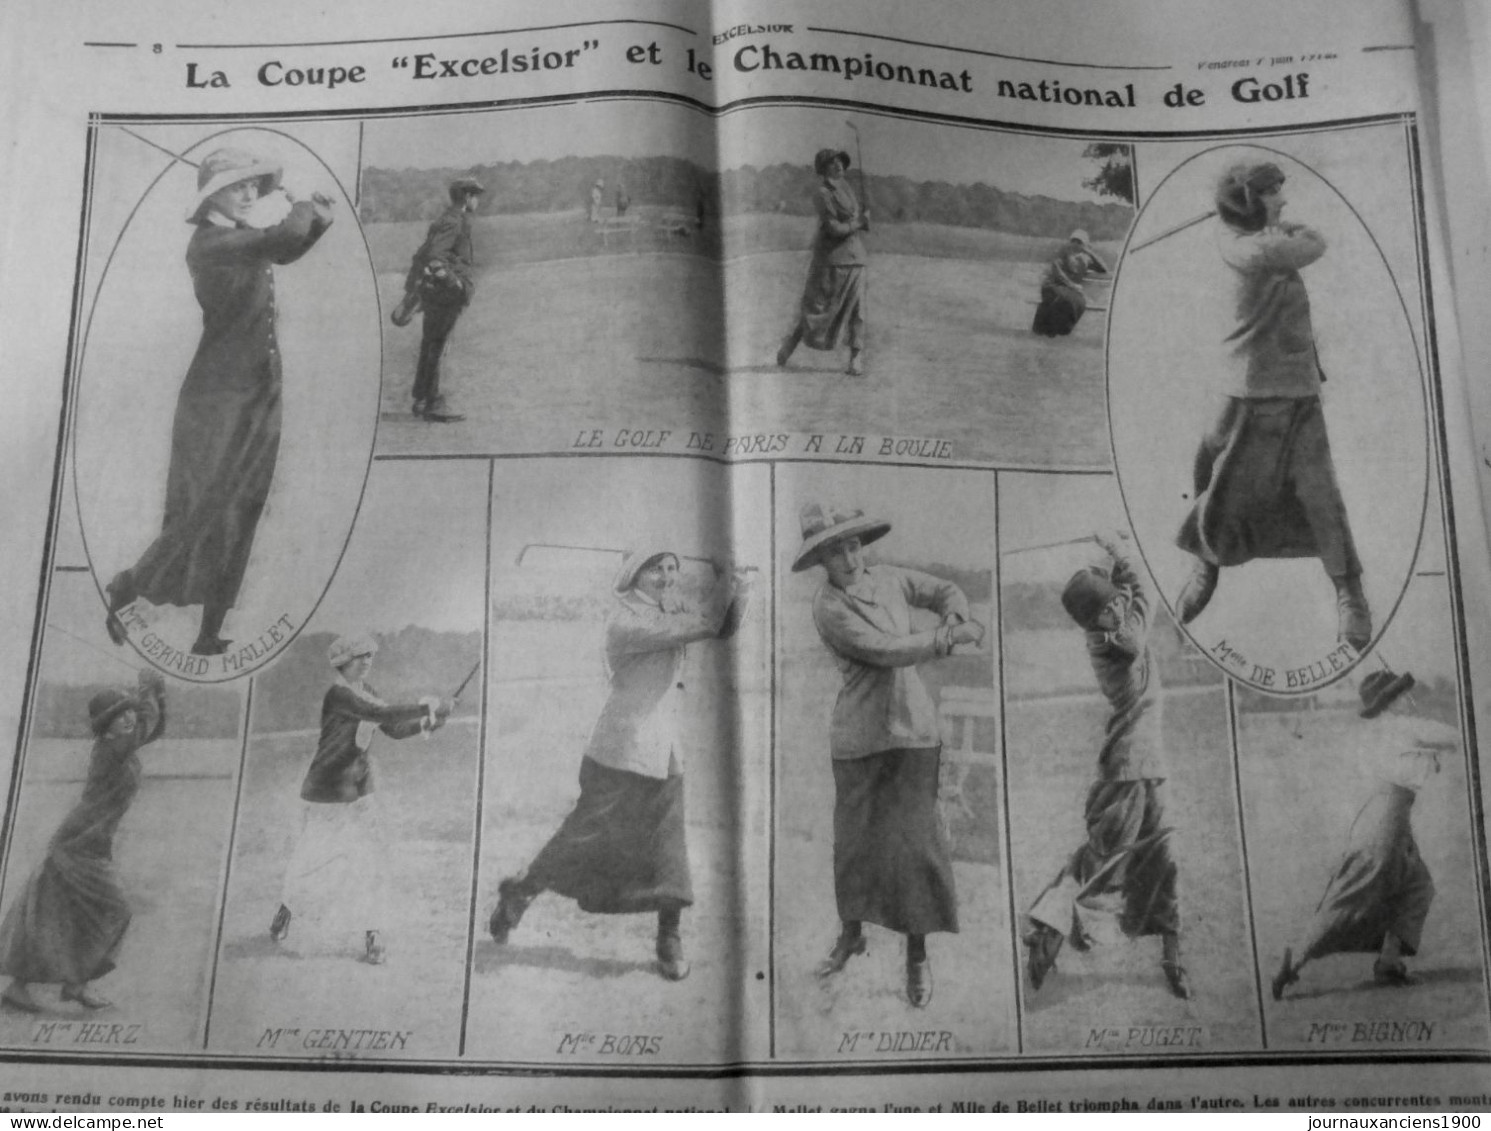 1912 EXCELSIOR ARTICLE DE PRESSE PARIS GOLF FEMININ MLES MALLET BELLET 1 JOURNAL ANCIEN - Glass Slides